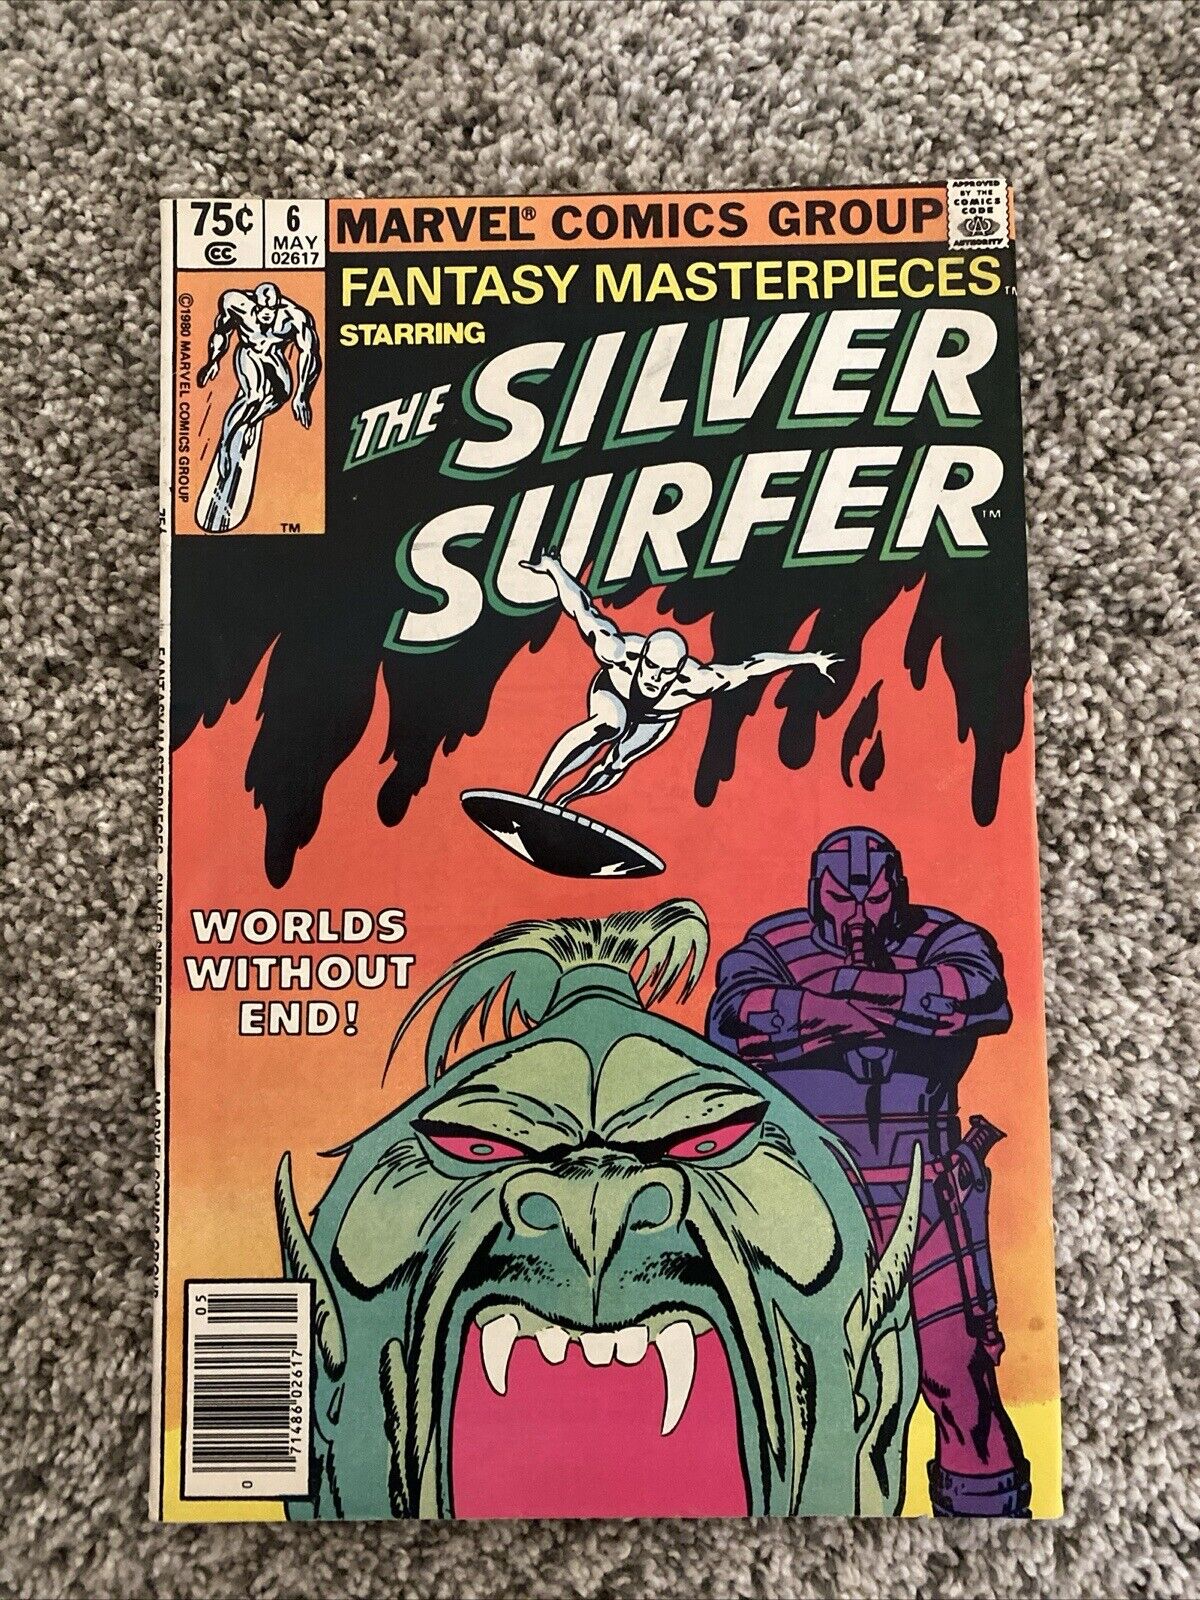 The Silver Surfer #6 (Marvel Comics June 1969)